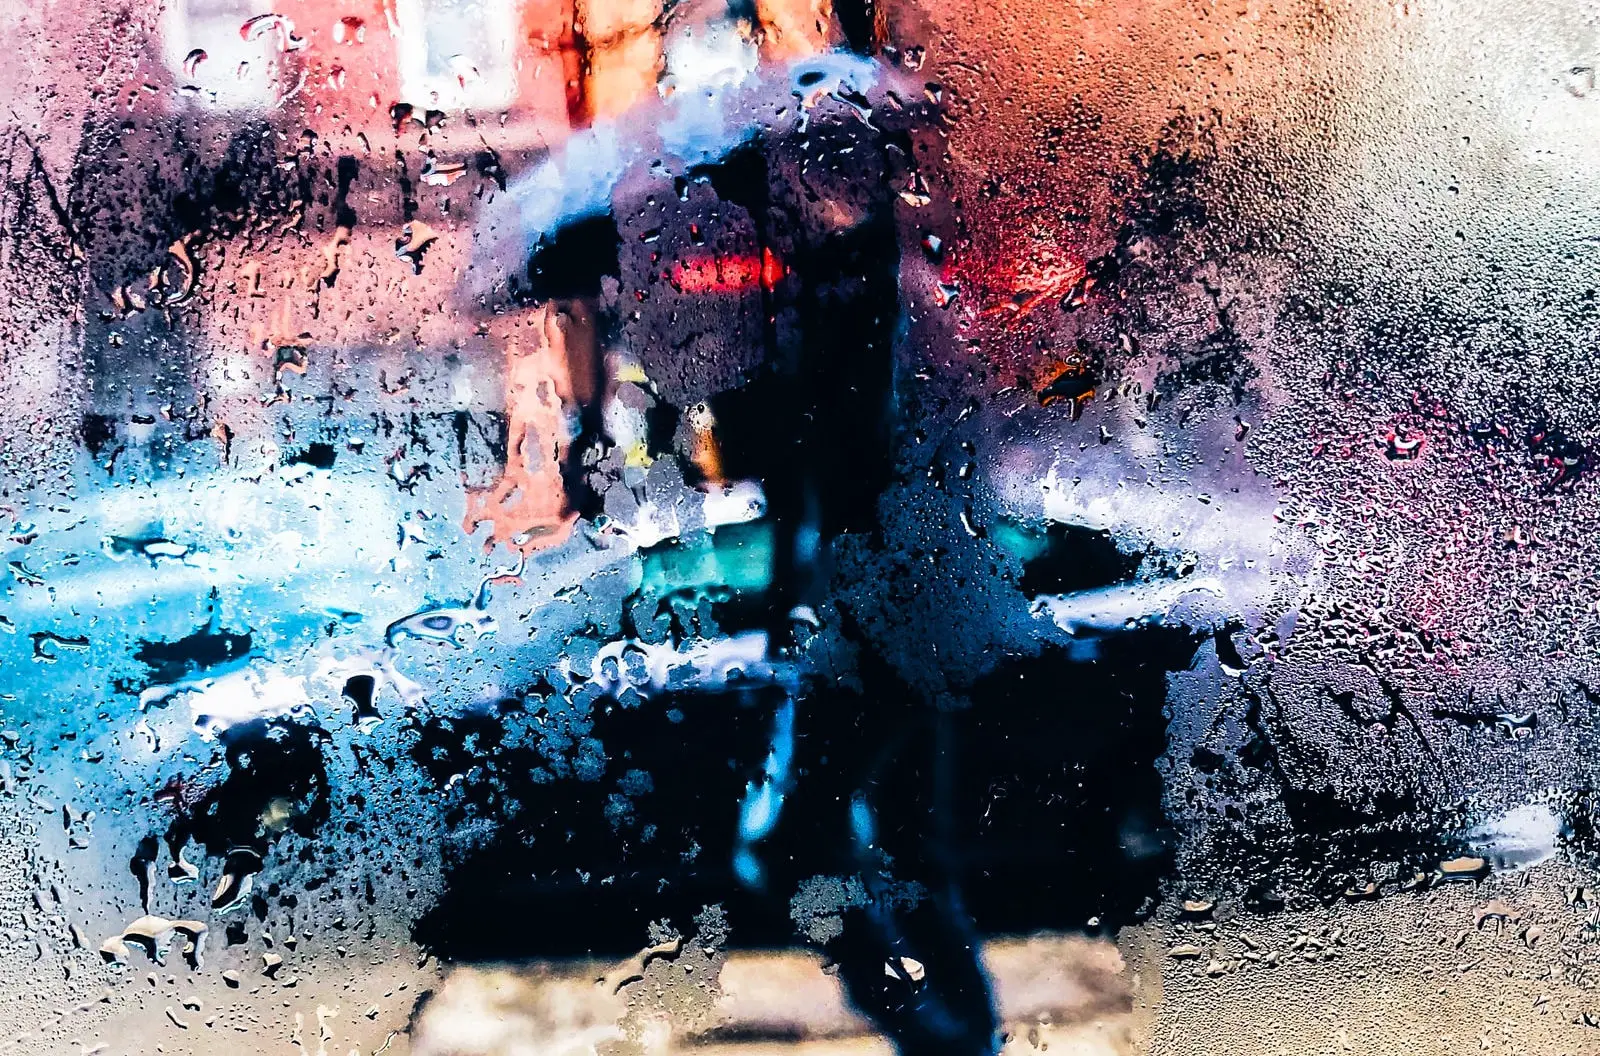 person with umbrella in the rain through a window